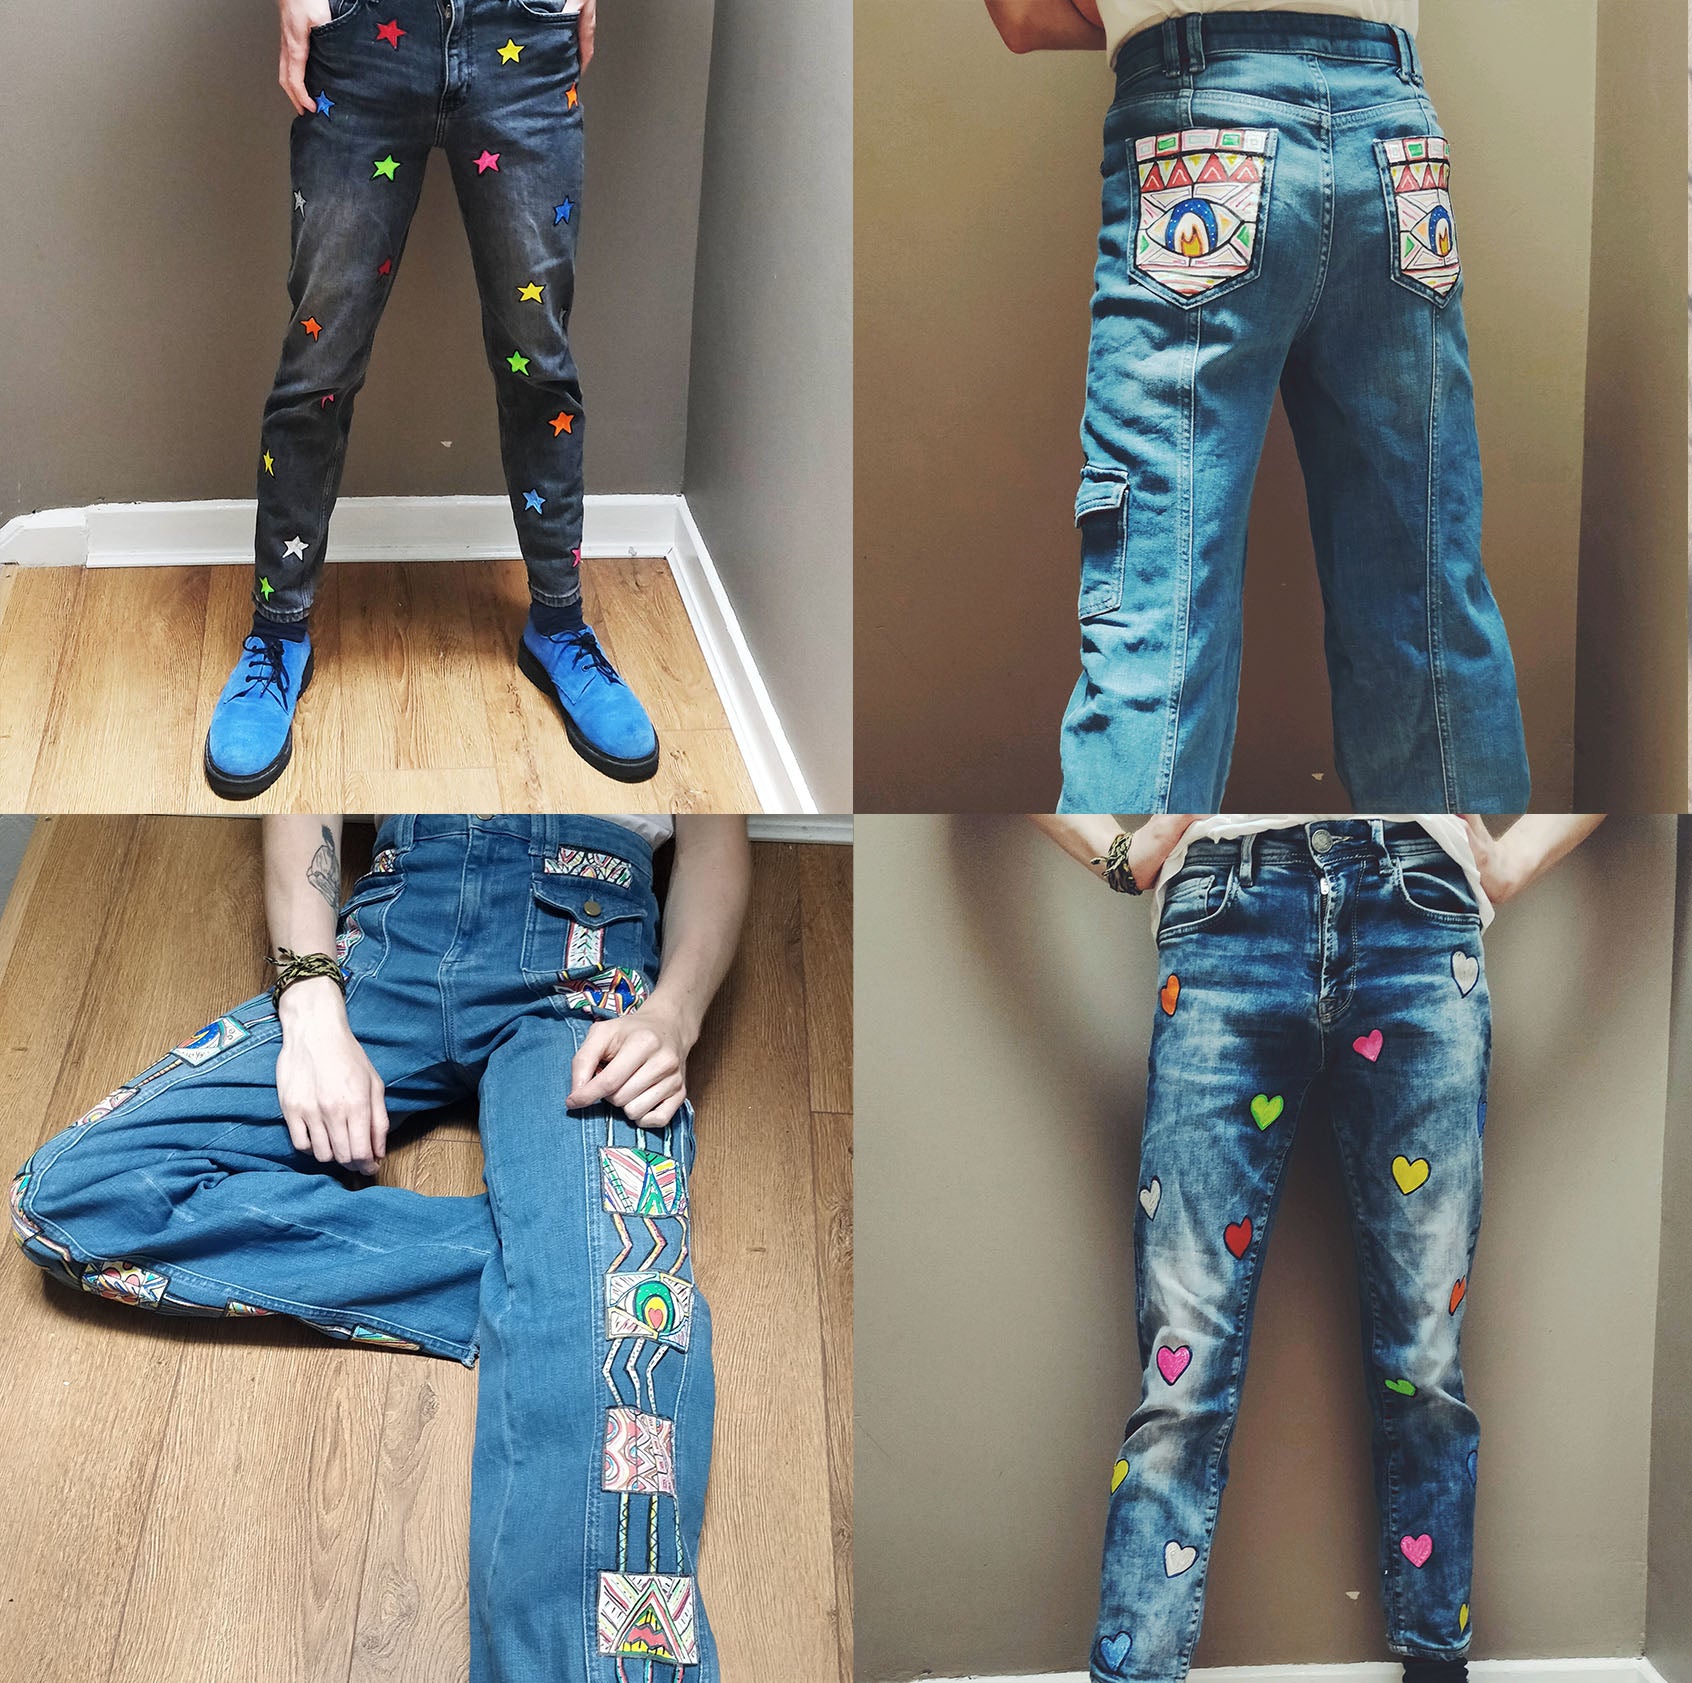 Buy Custom Hand-Painted Denim Jeans - Best Offers Online